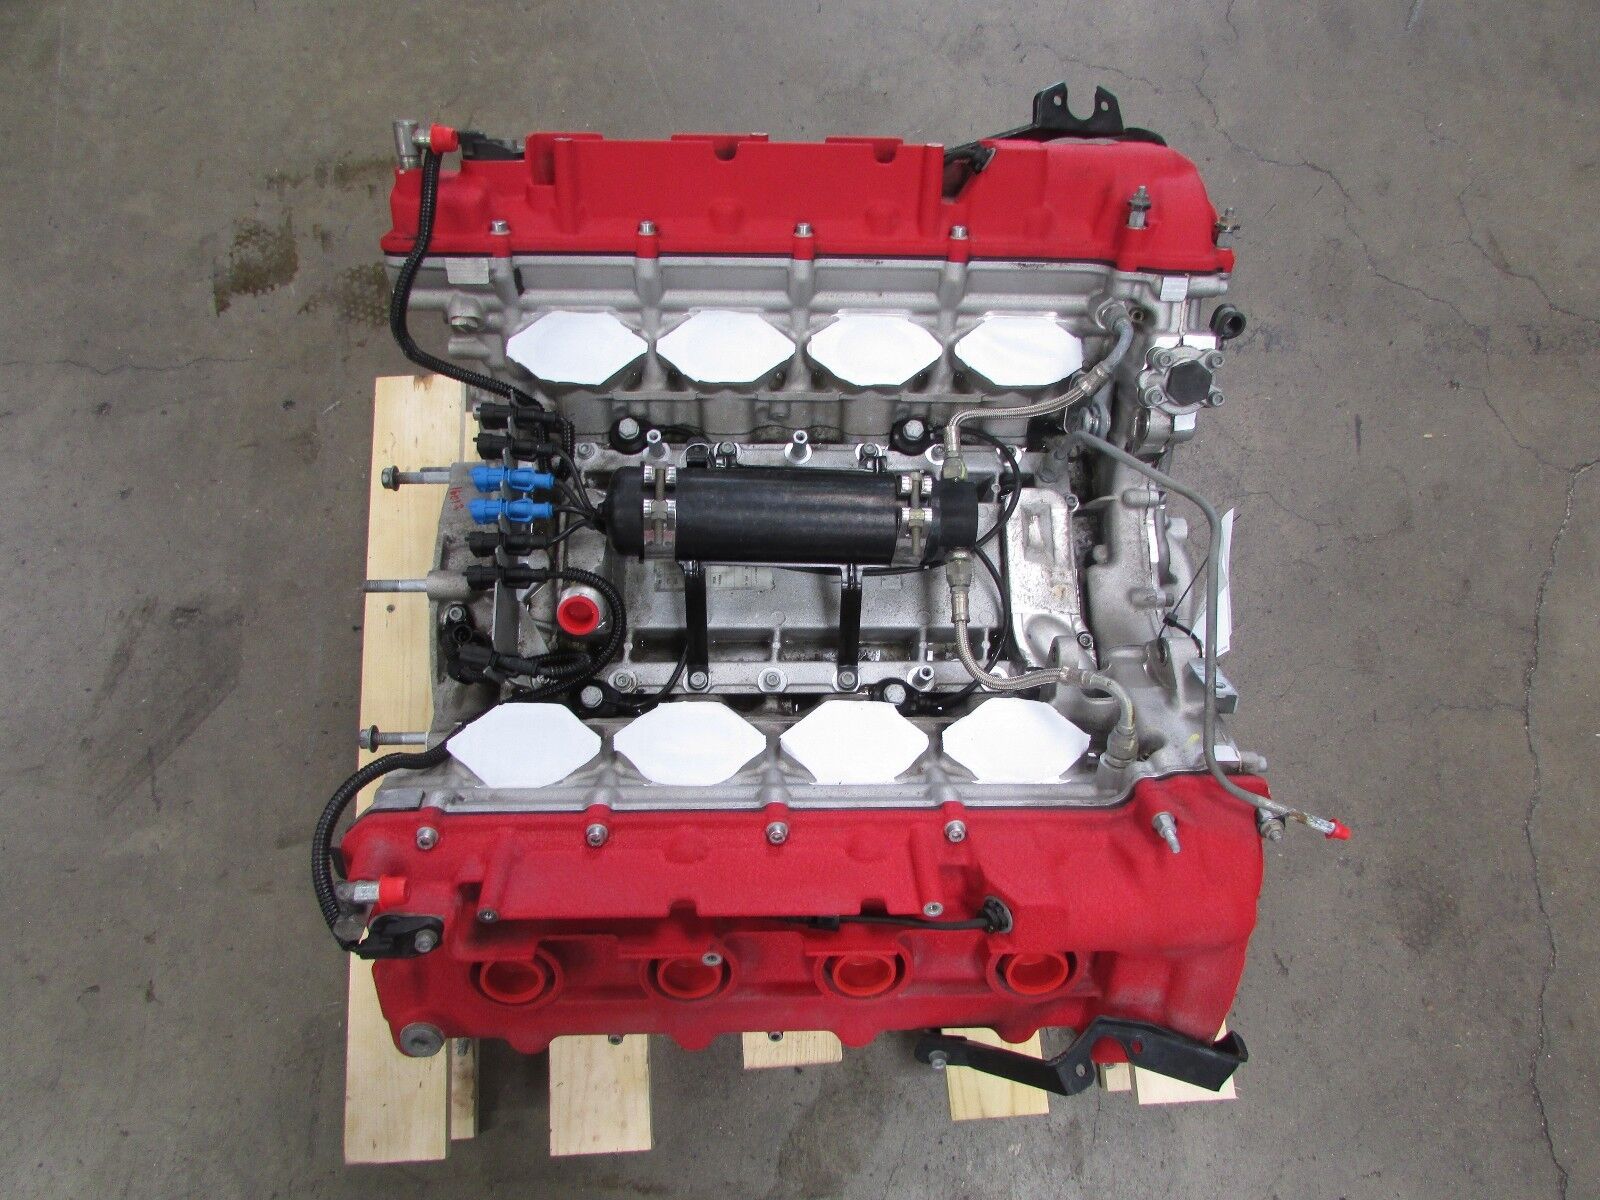 2007 Maserati M139 Quattroporte Engine Long Block, With Warranty, Used 72k Miles